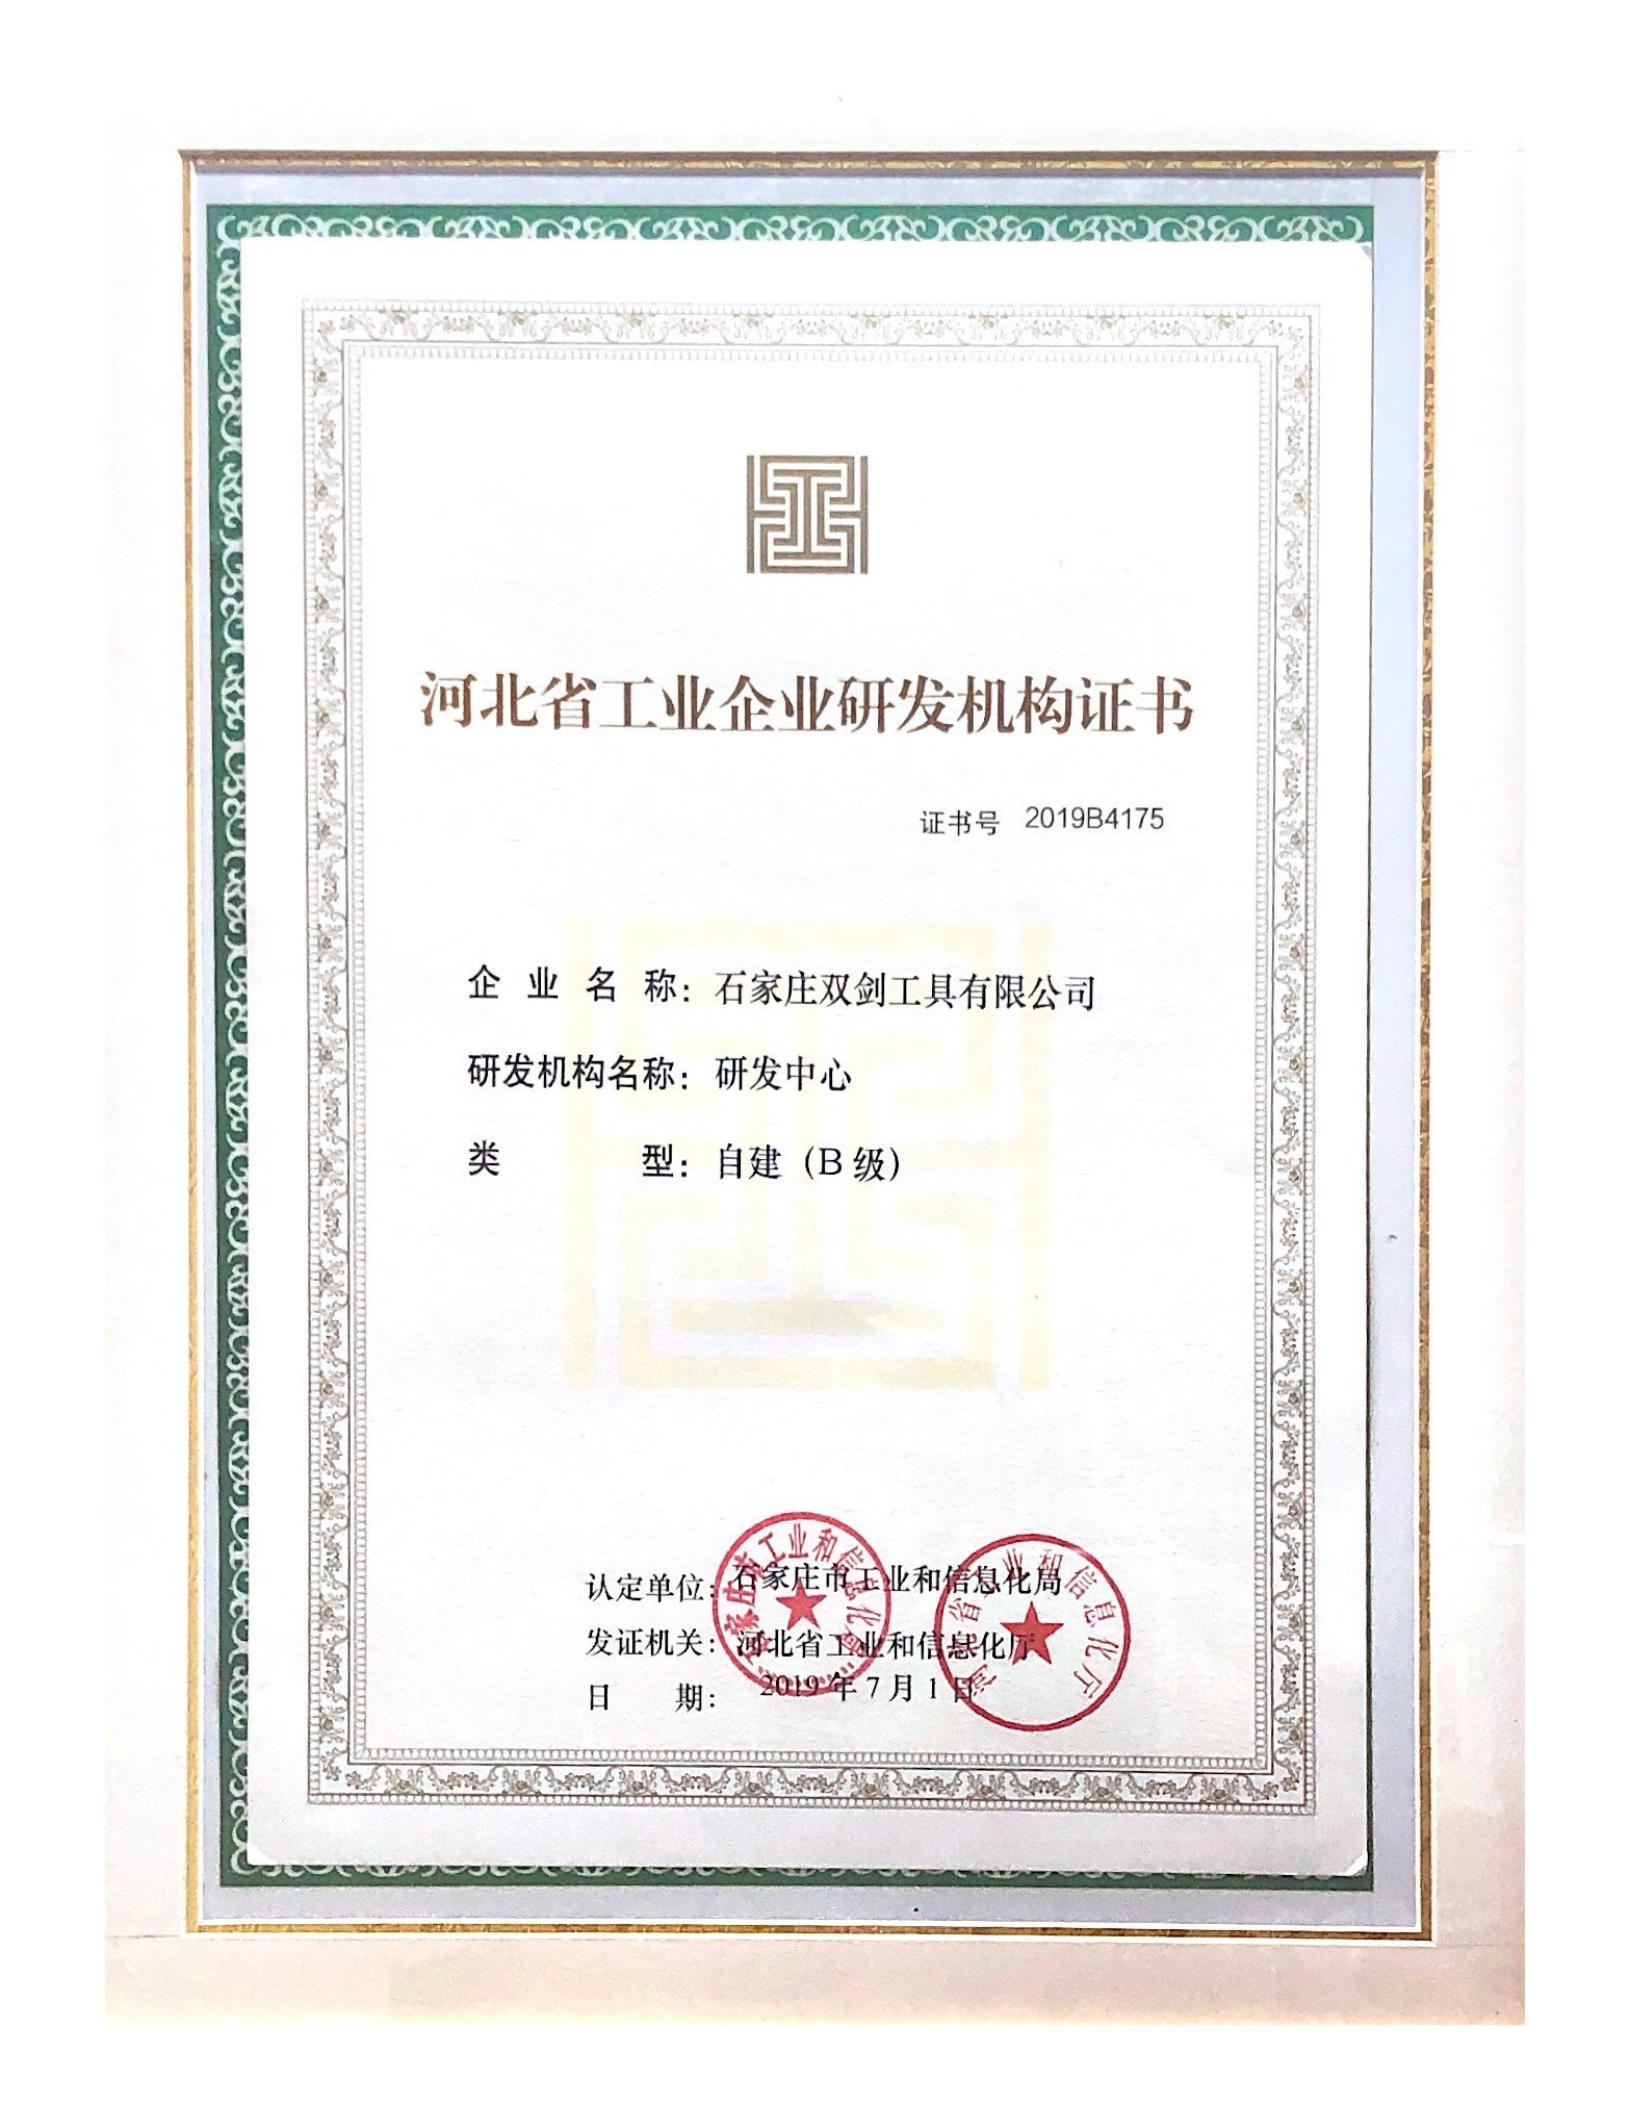 Enterprise R&D Organization Certificate